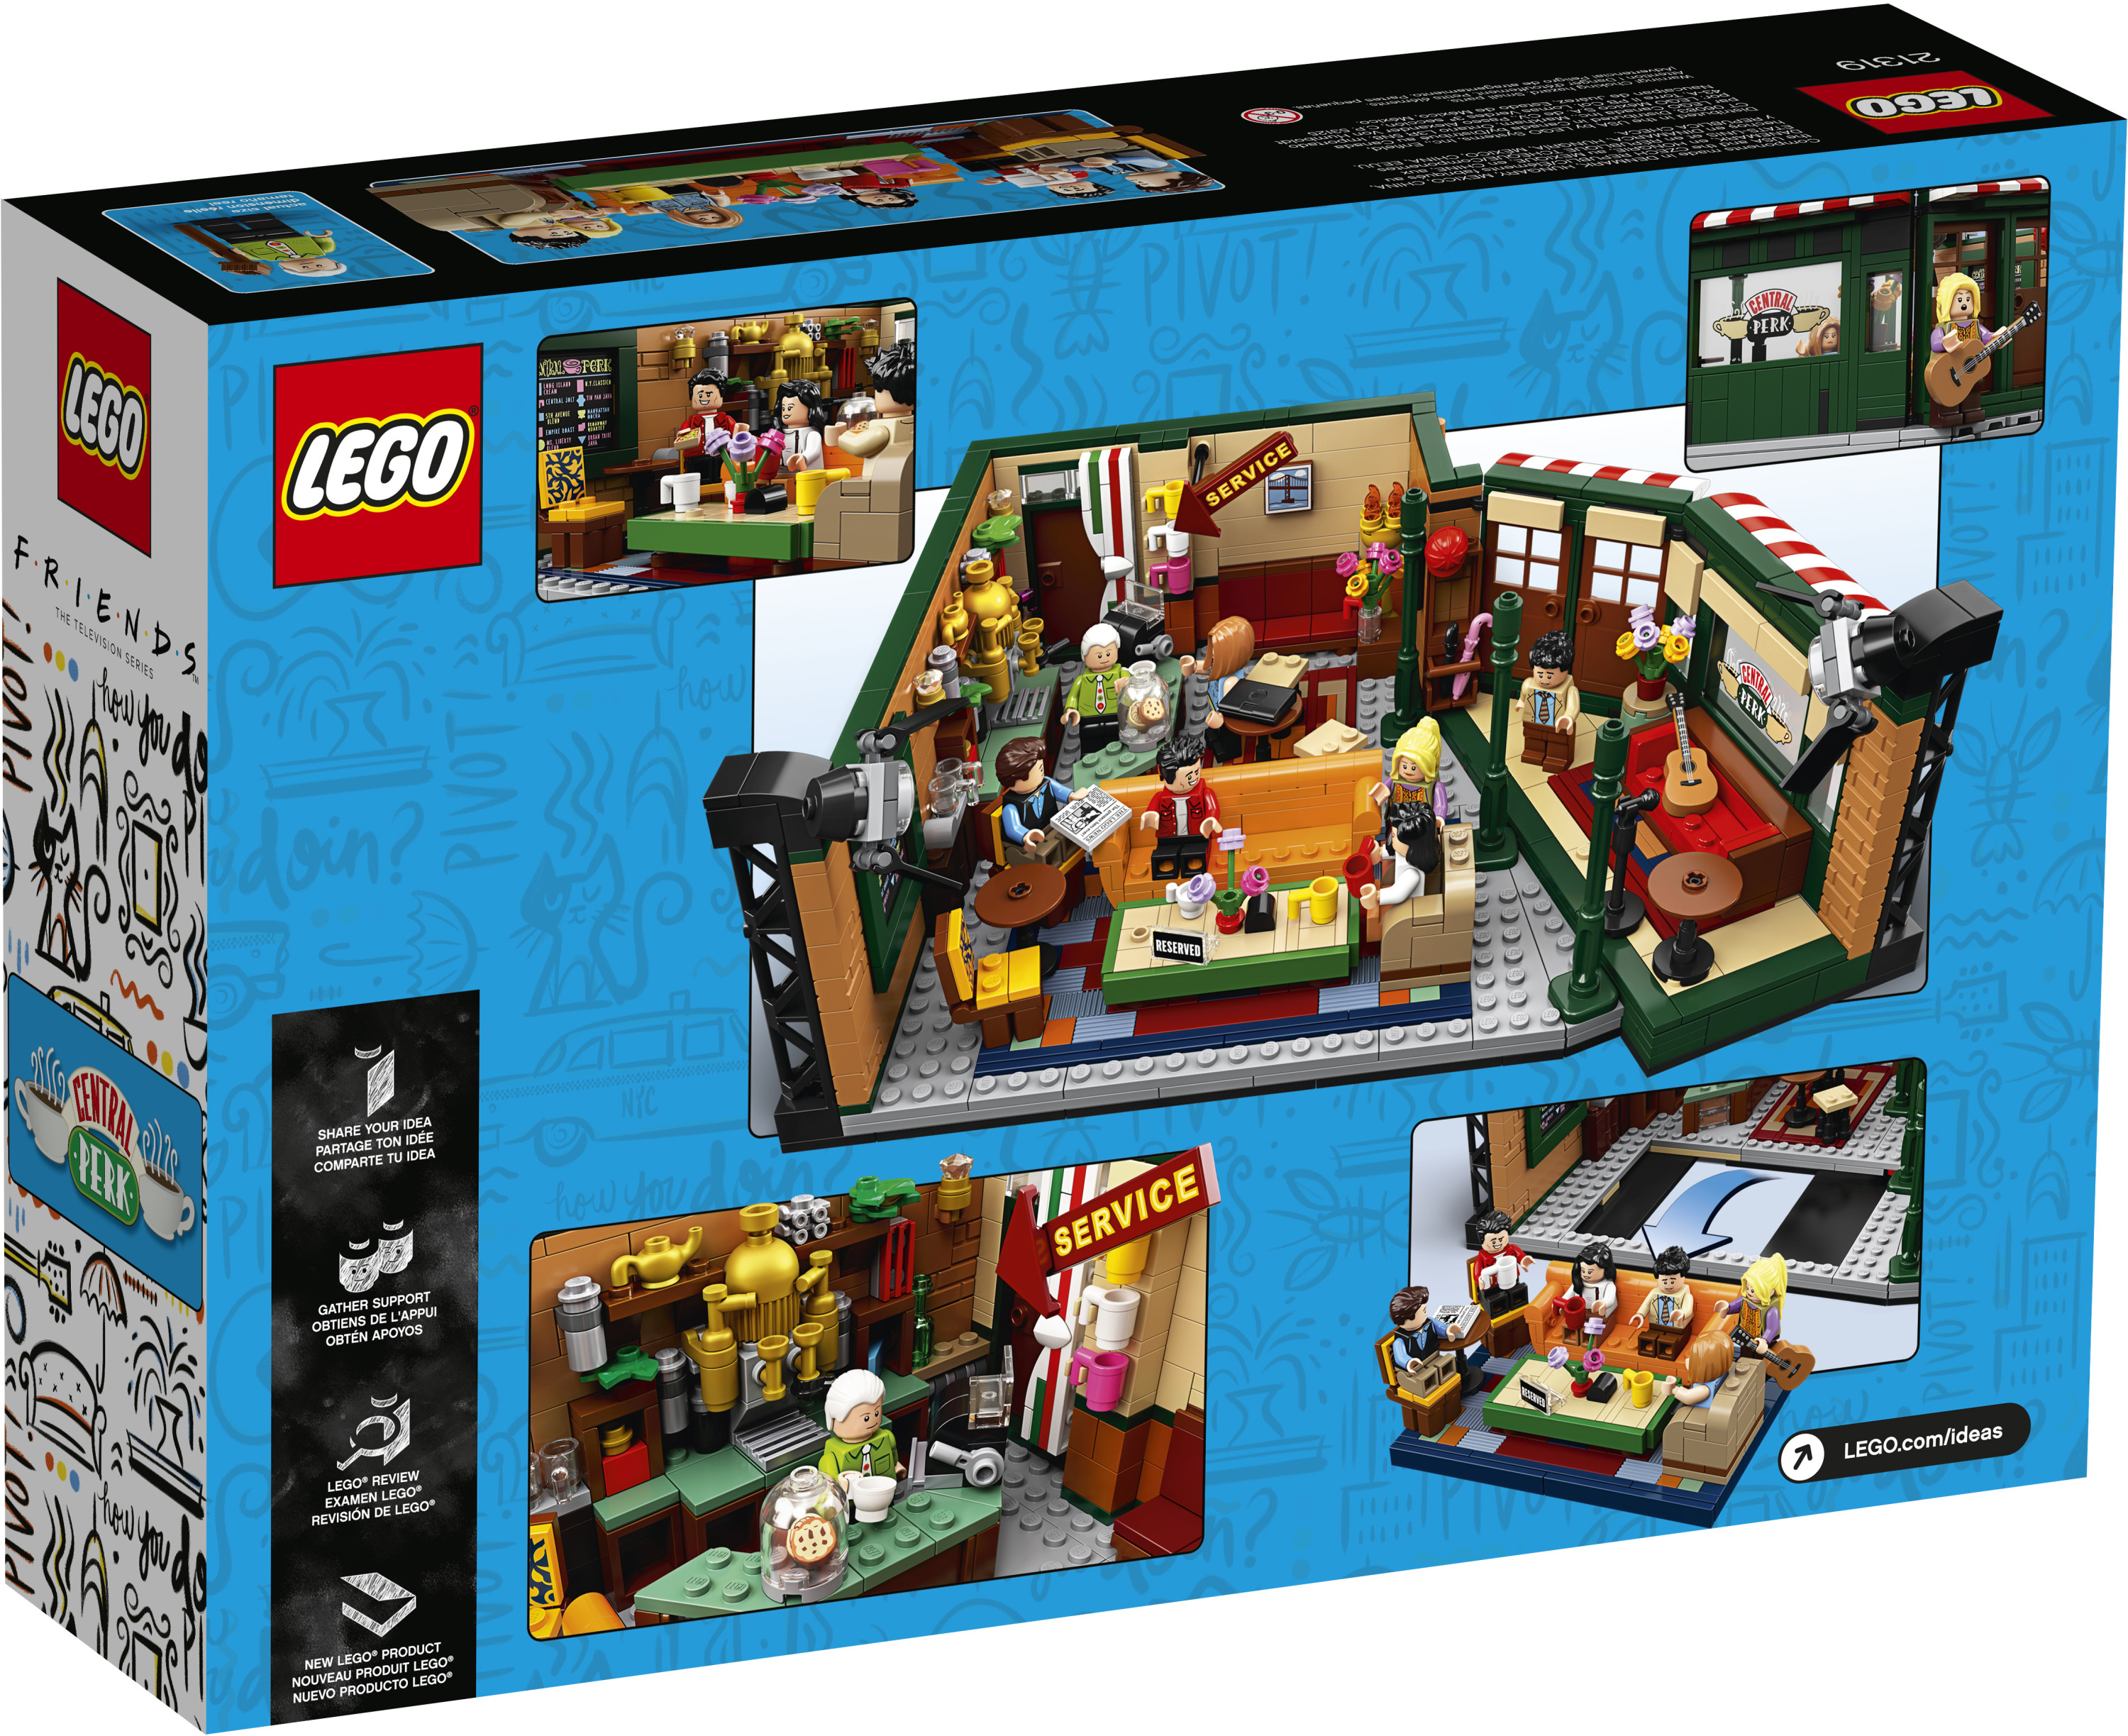 1070-Piece LEGO Ideas Friends Central Perk Building Set $48 + Free Shipping